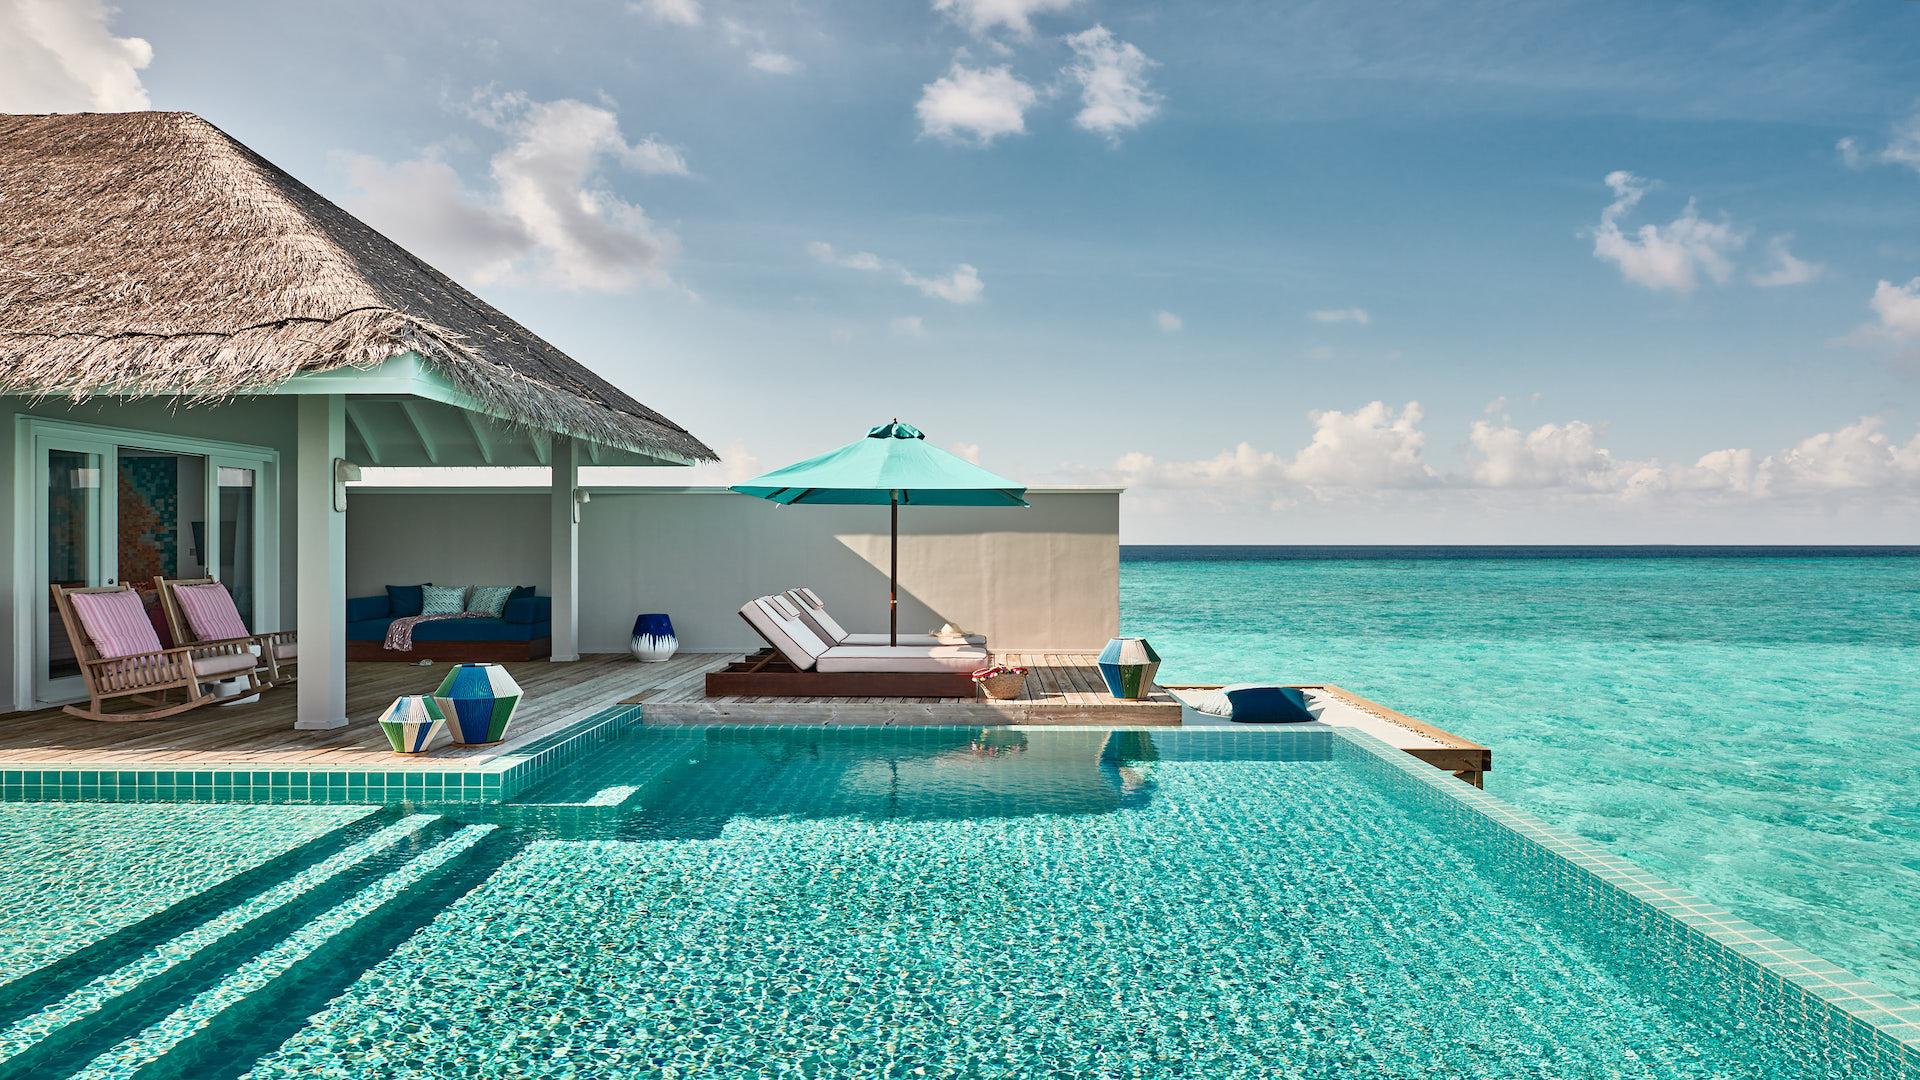 2103_Finolhu Maldives_Two-Bedroom Rockstar Villa - Sundeck and pool